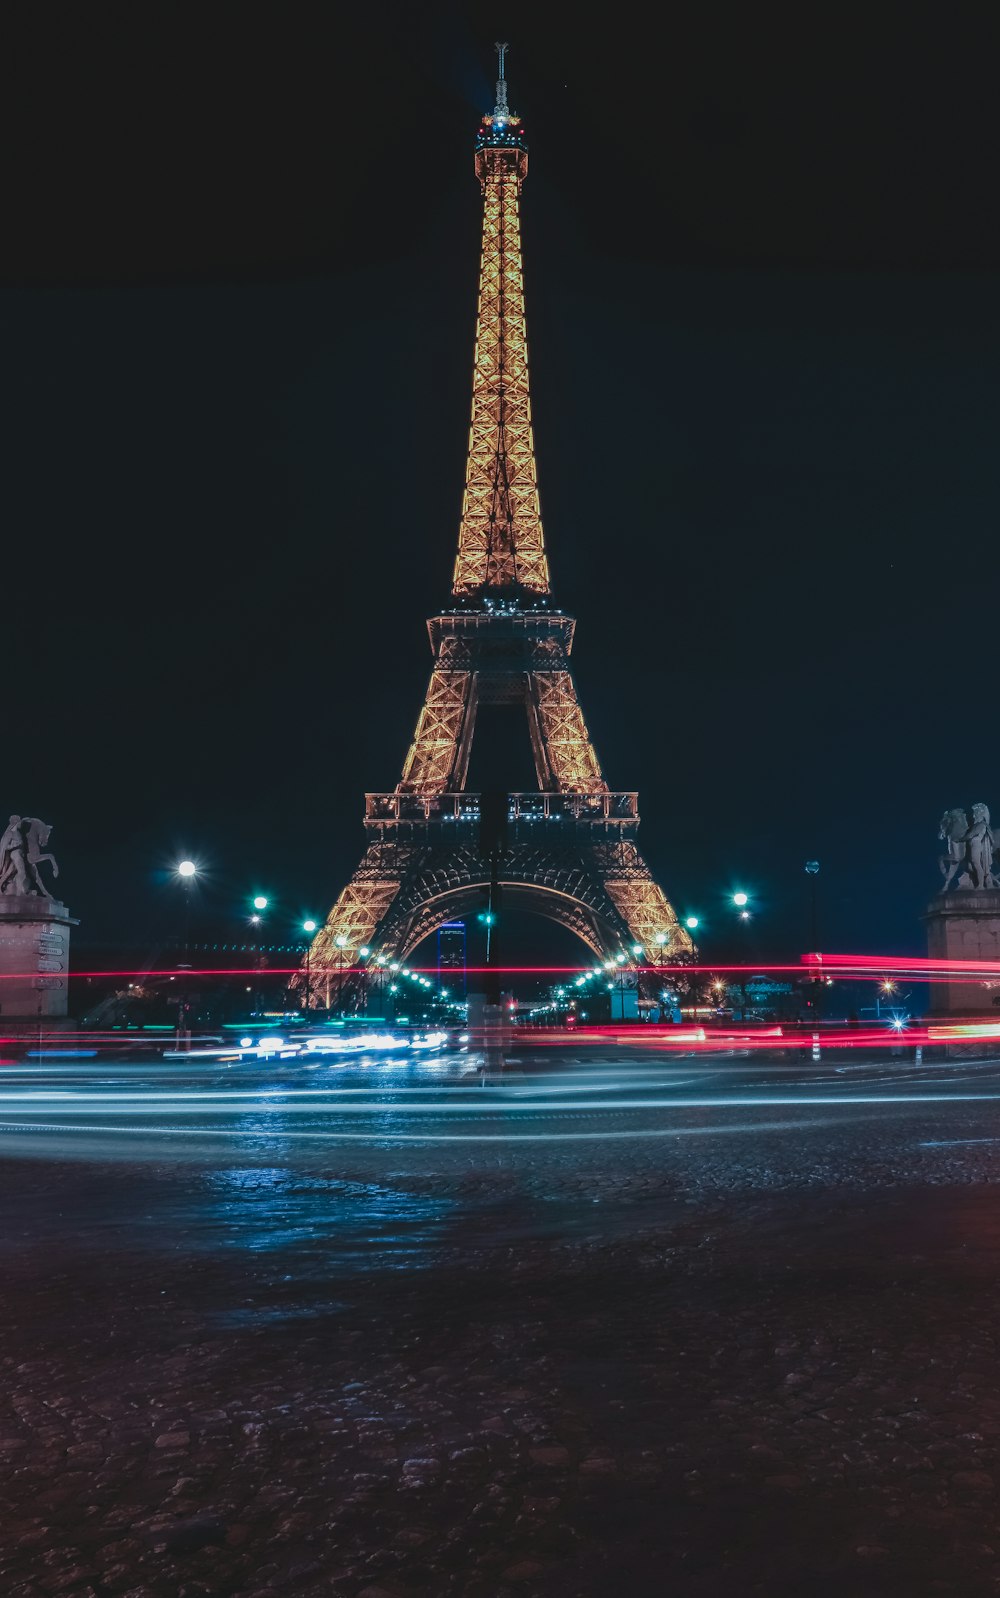 Eiffel Tower, Paris during nighttime